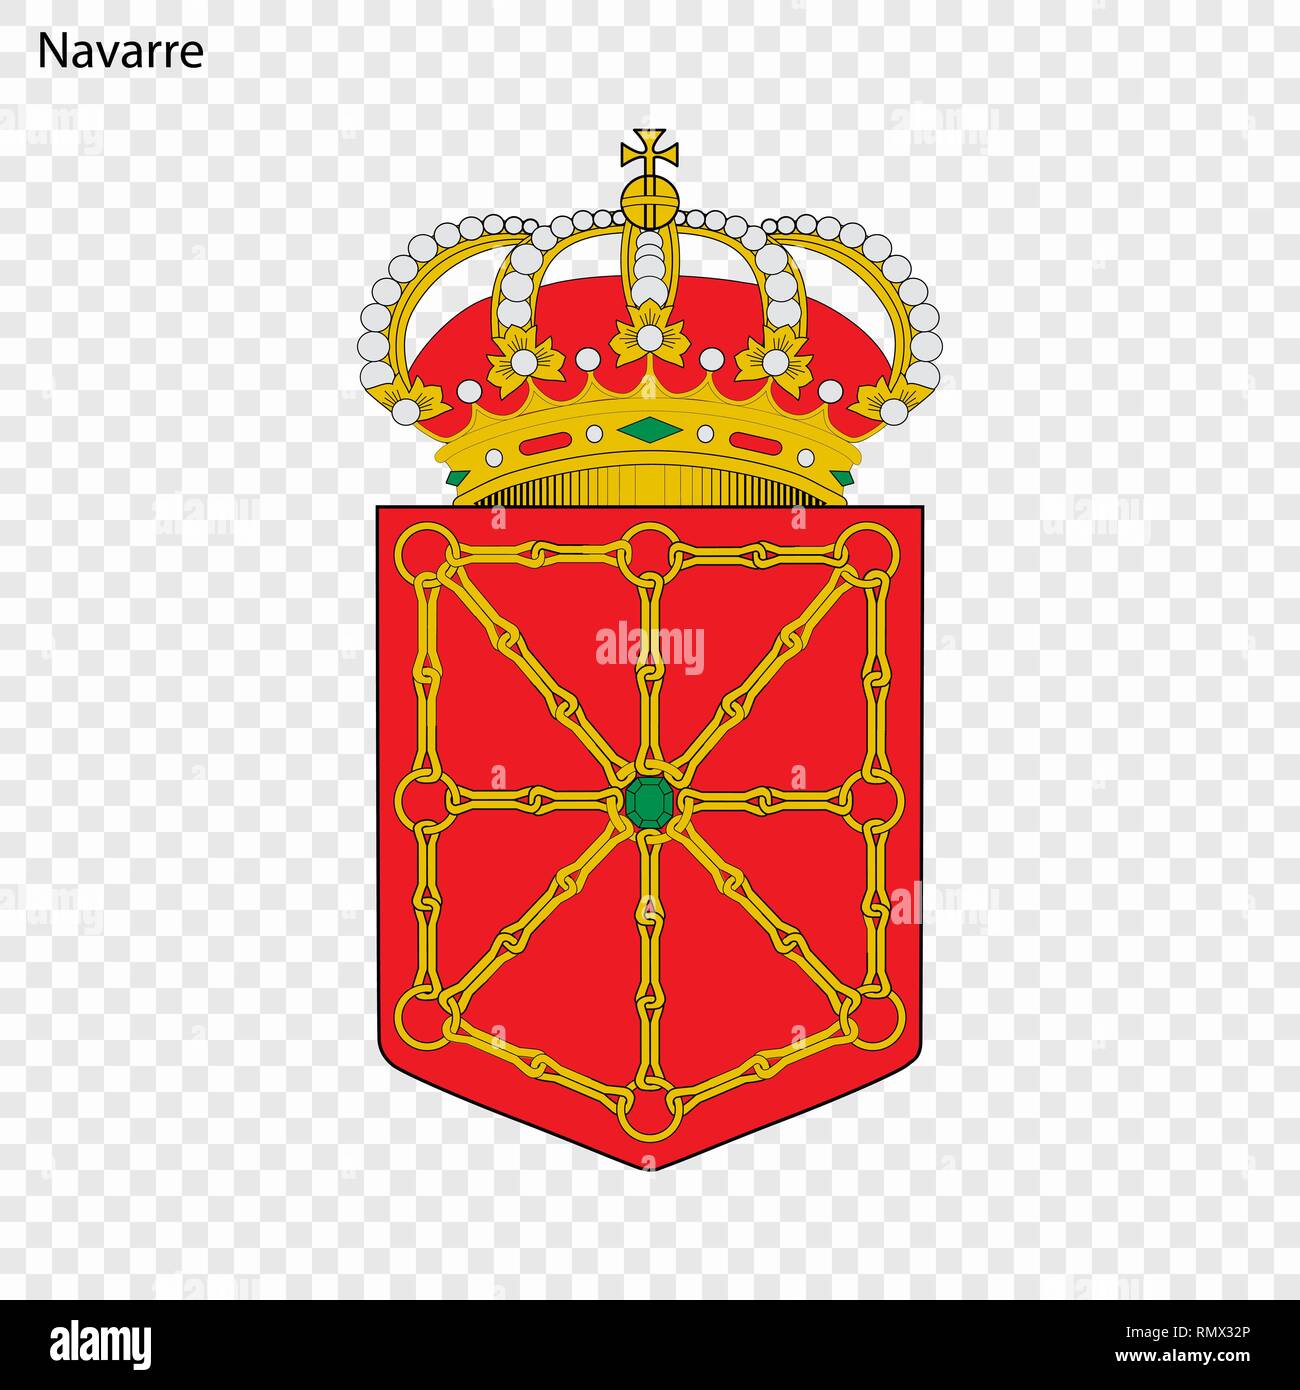 Emblema della Navarra, provincia di Spagna. Illustrazione Vettoriale Illustrazione Vettoriale